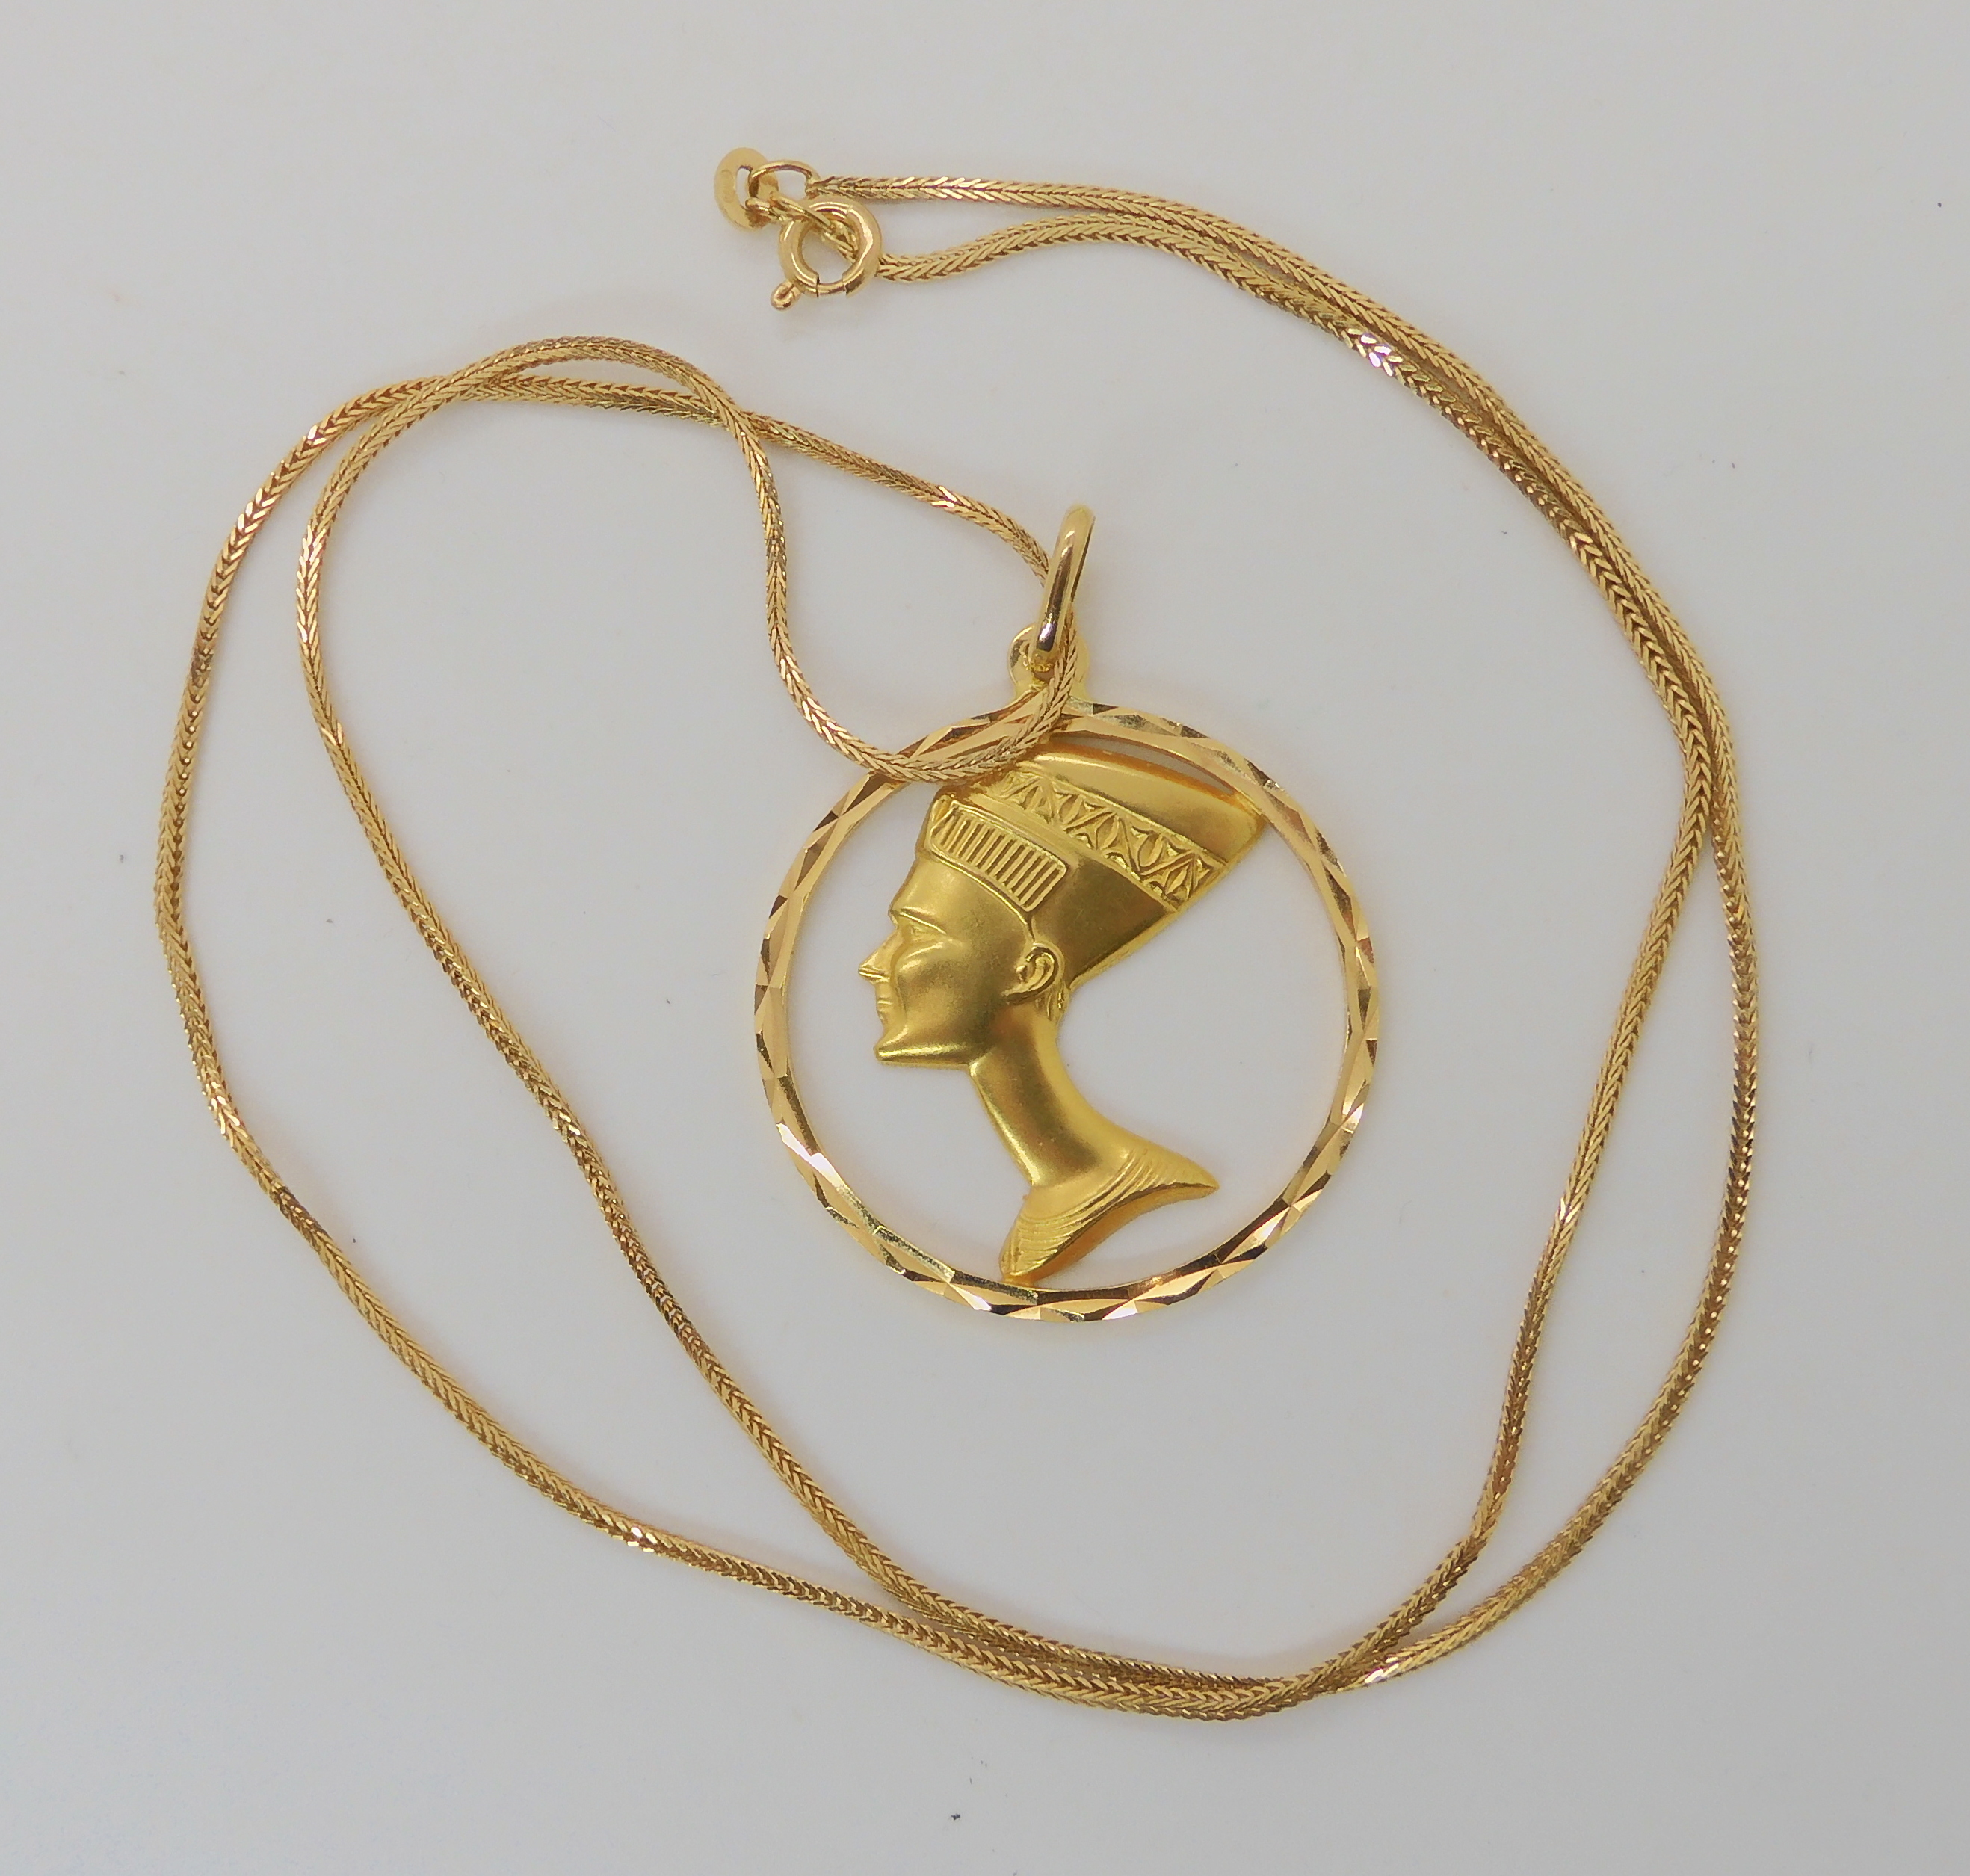 A 18k Nefertiti pendant diameter 3.5cm, on an 18ct gold Italian herringbone chain length 60cm